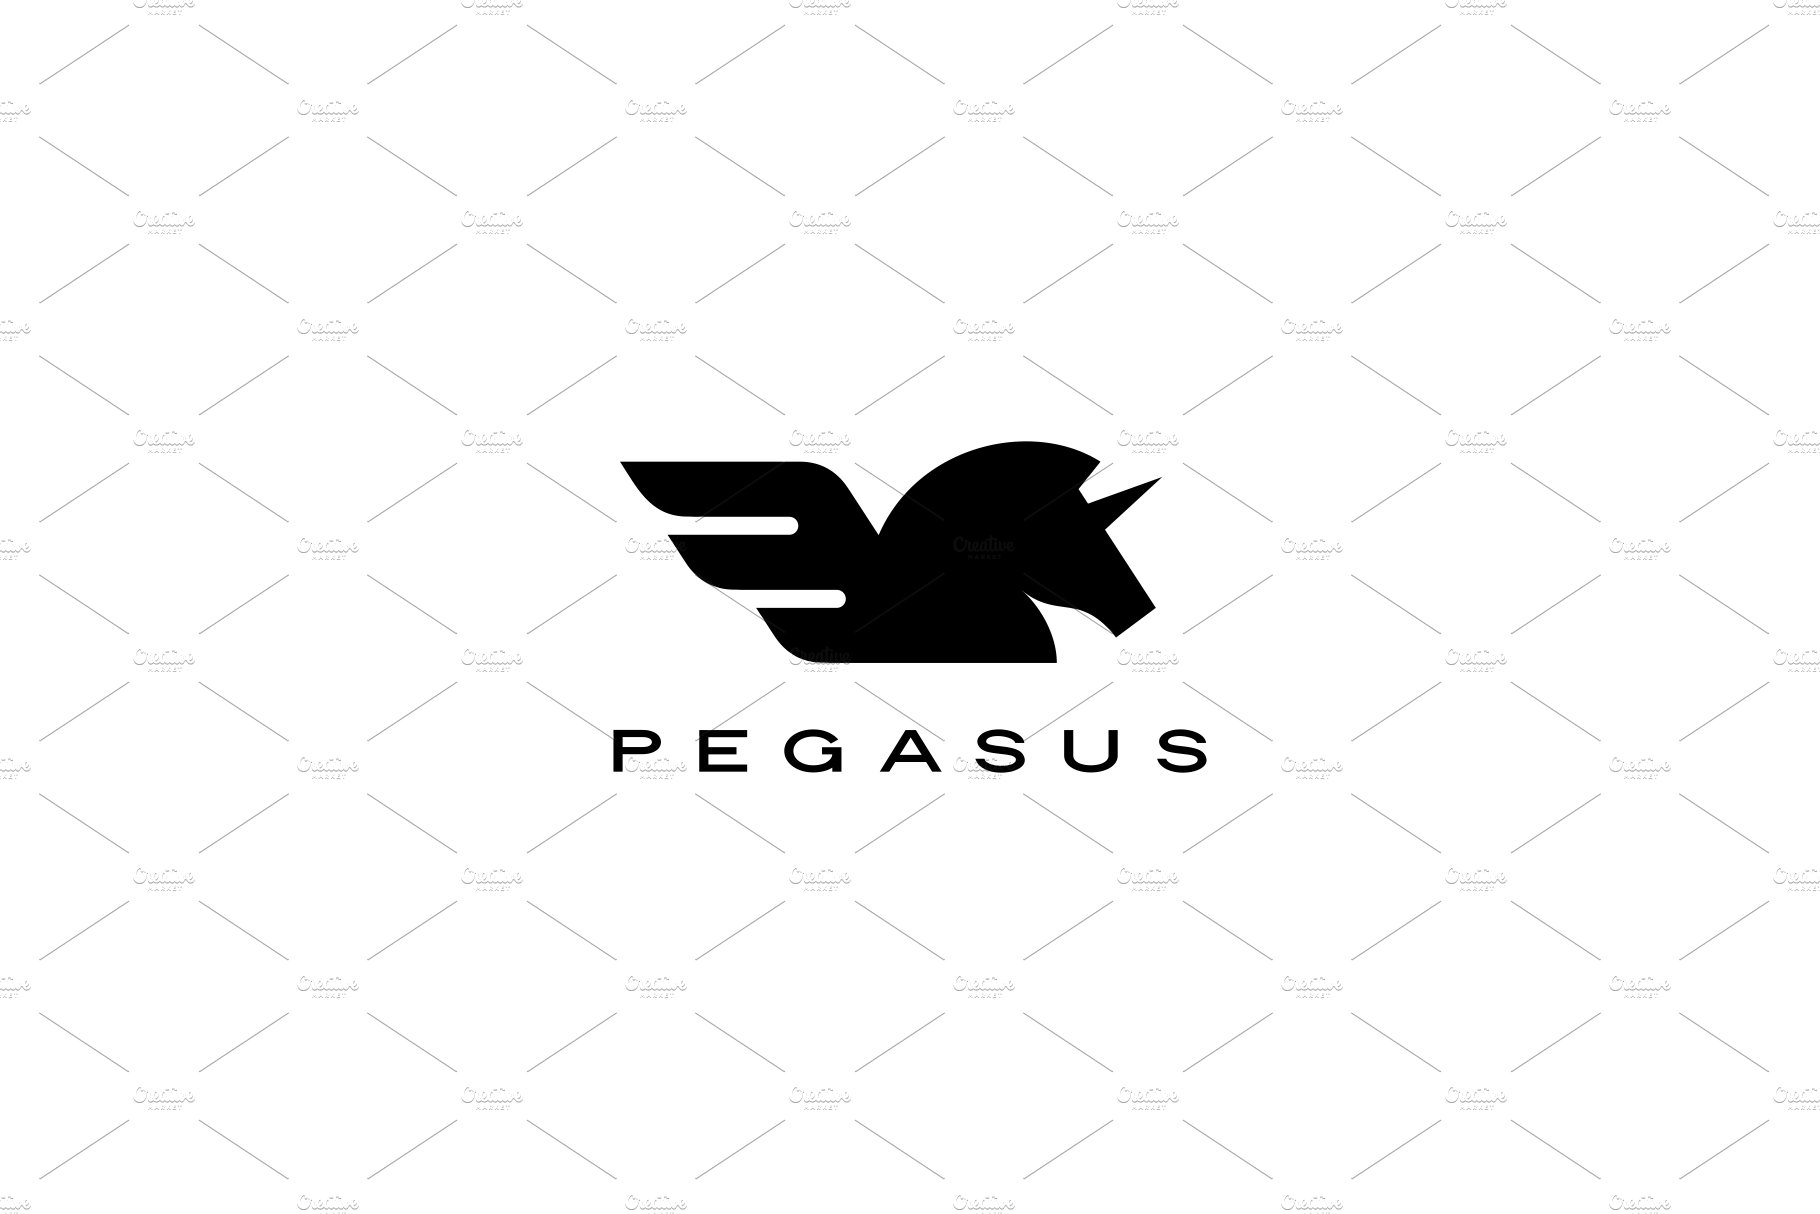 pegasus unicorn horse wing logo cover image.